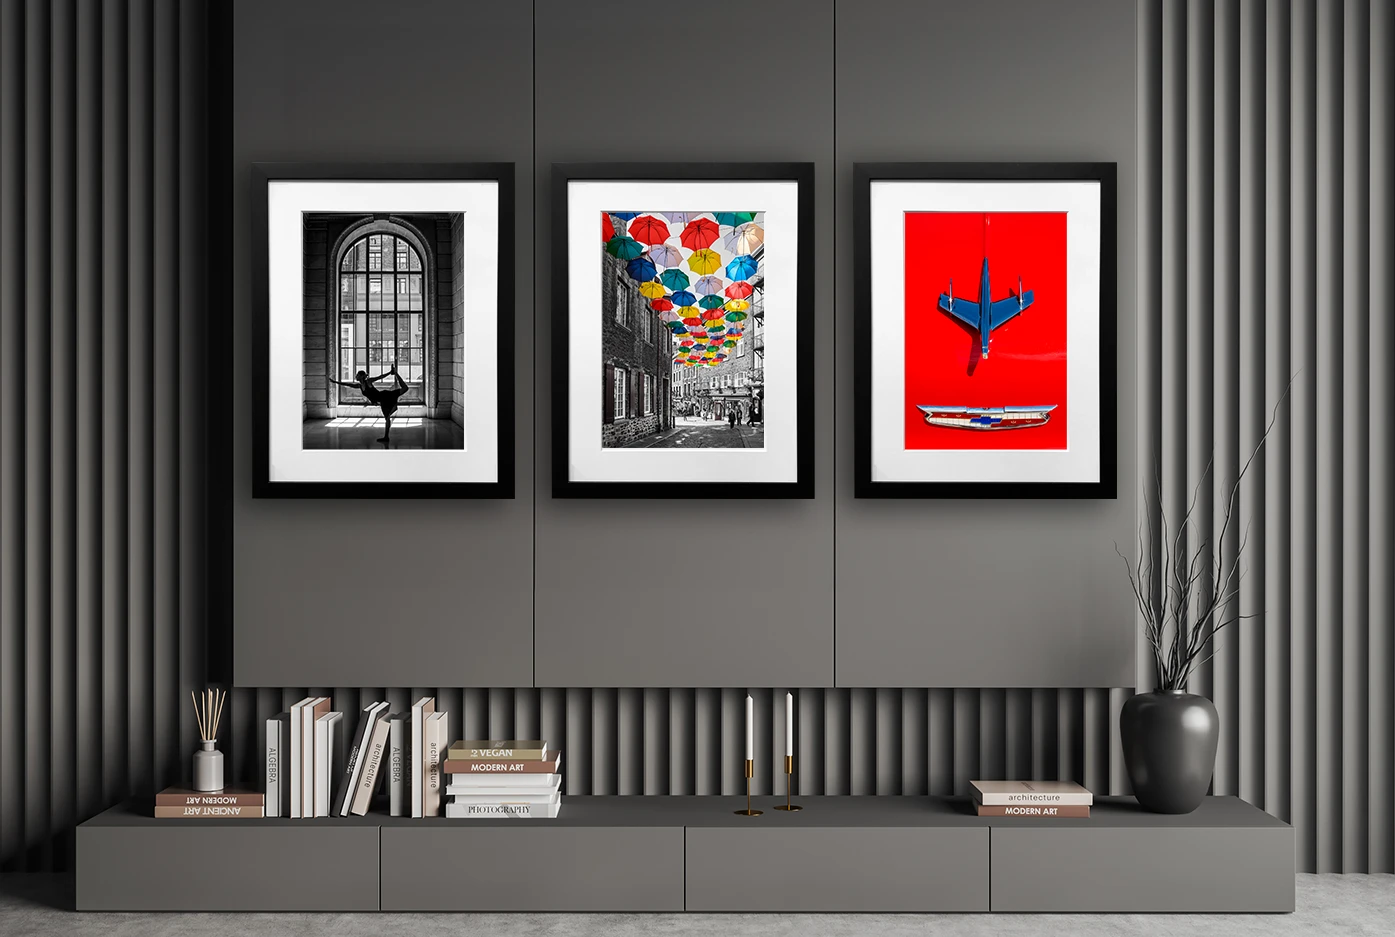 Stylish modern room with three framed fine art photographs